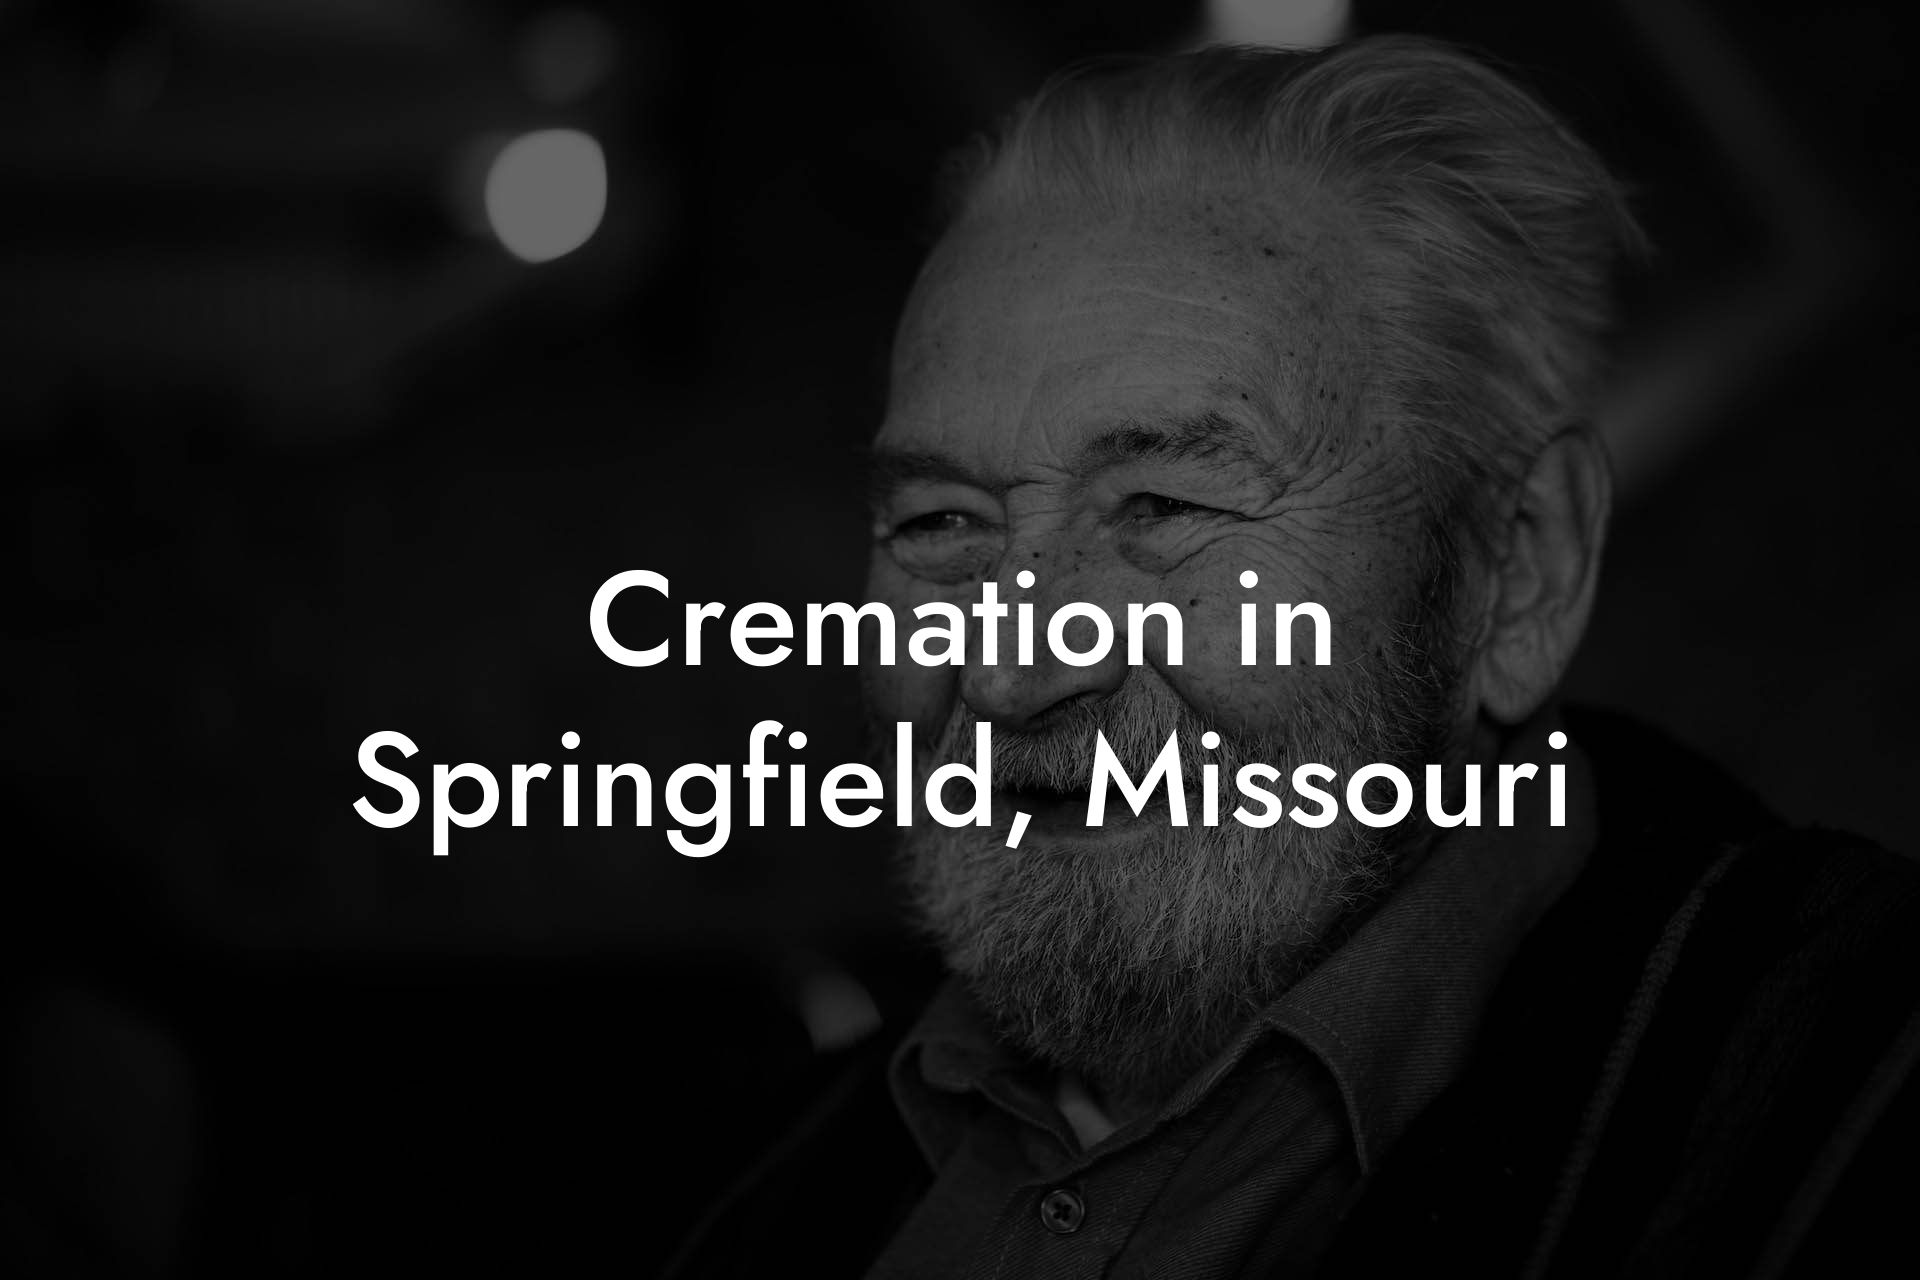 Cremation in Springfield, Missouri